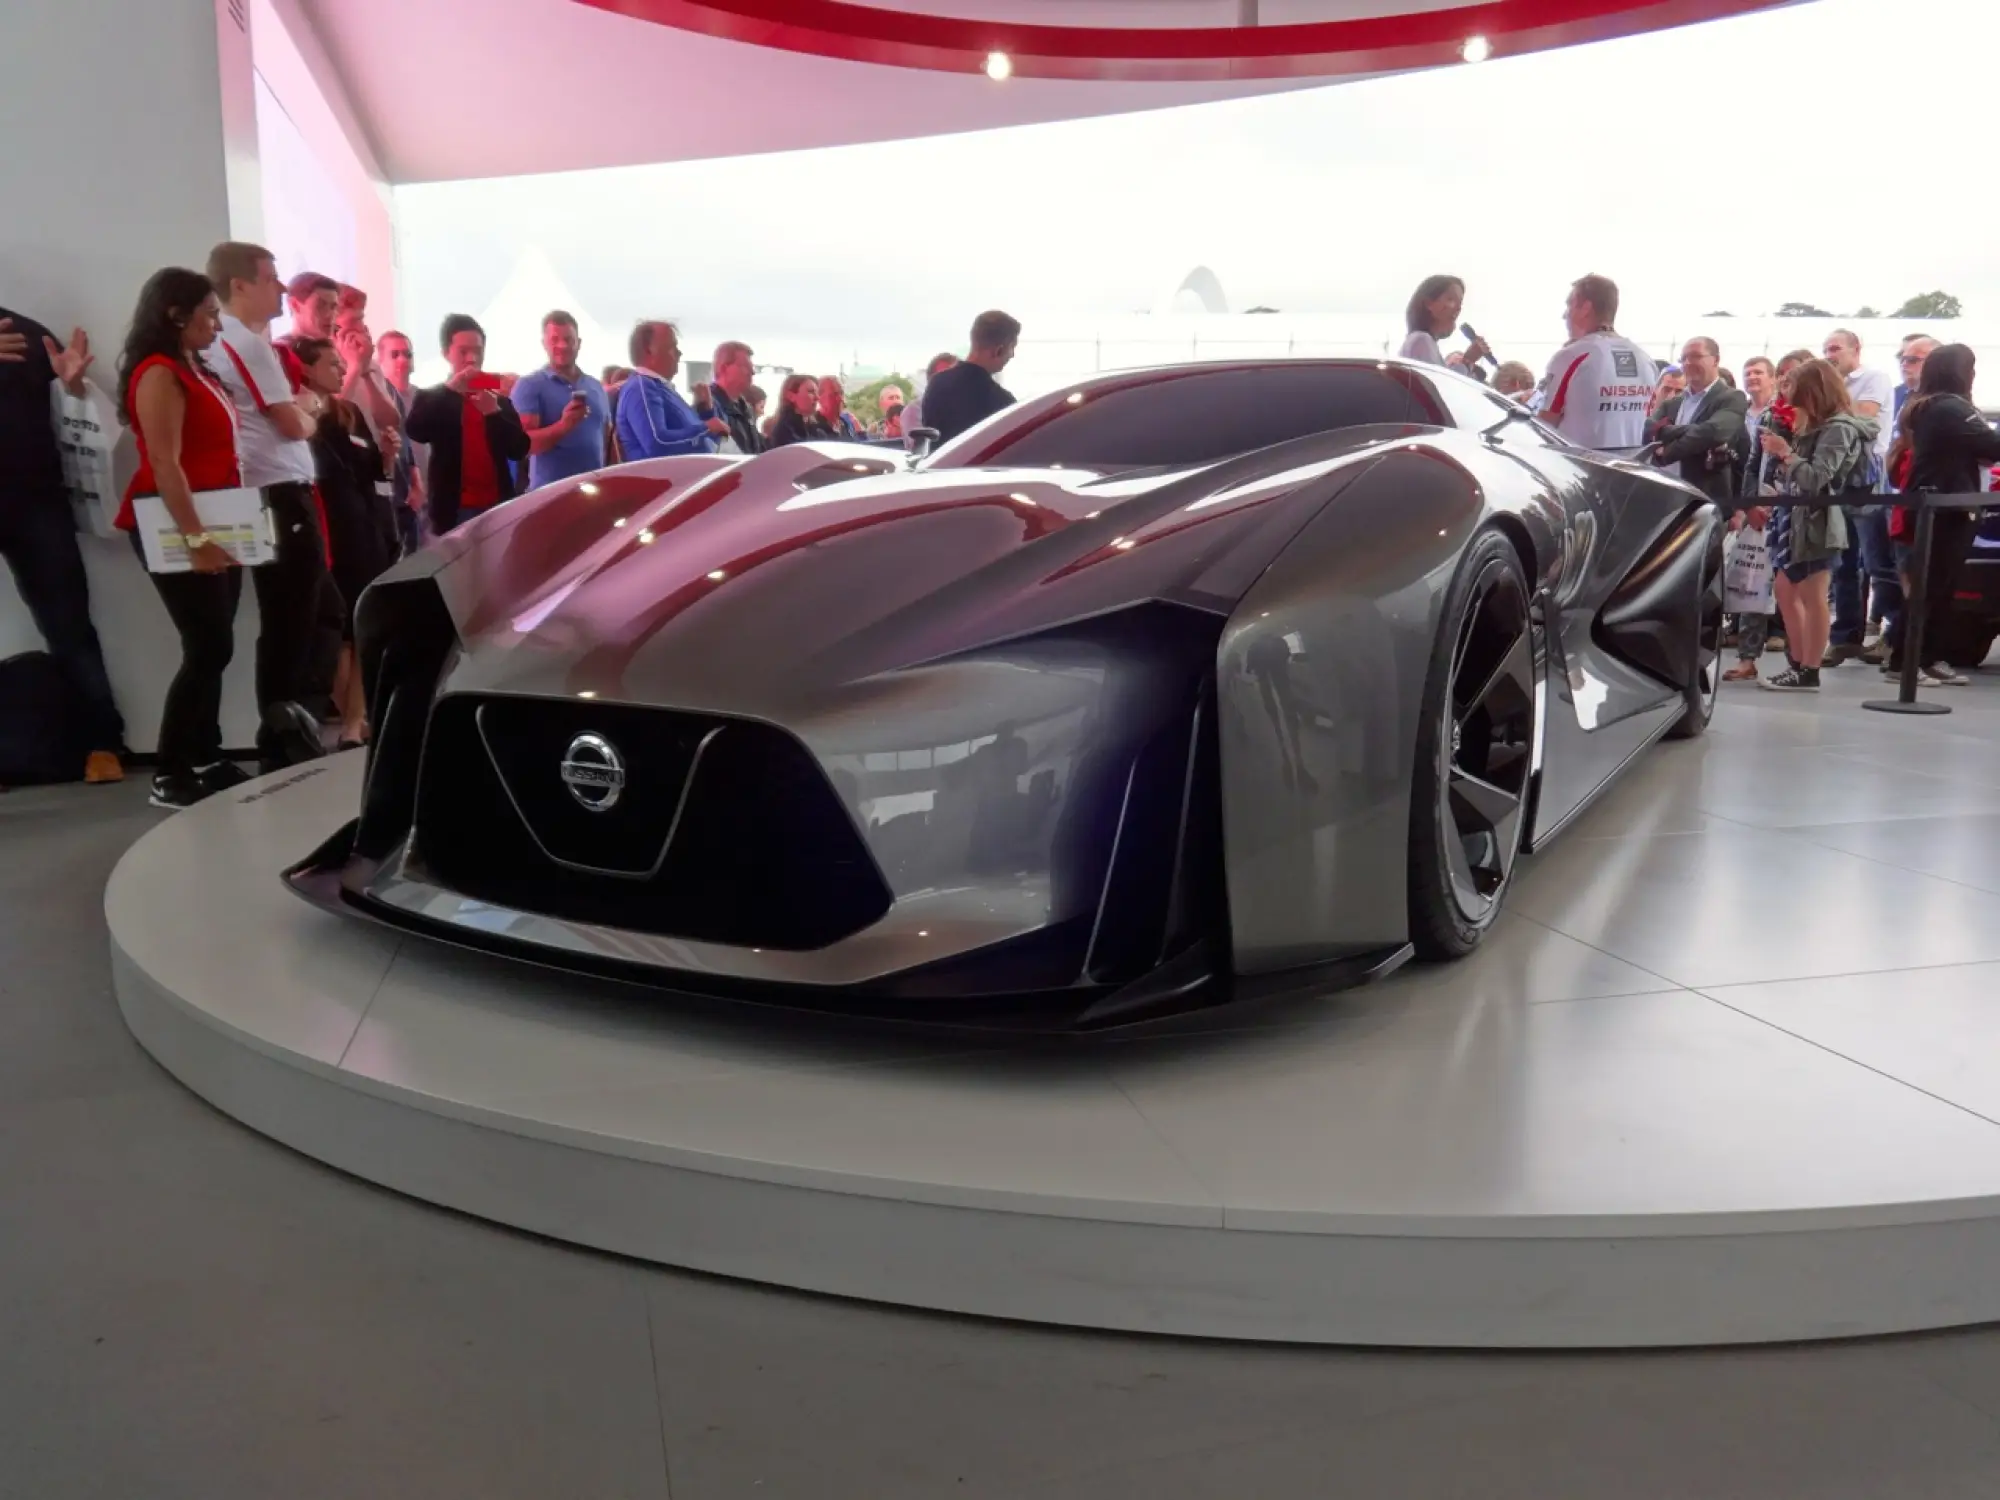 Nissan Concept 2020 Vision Gran Turismo - Goodwood 2014 - 7